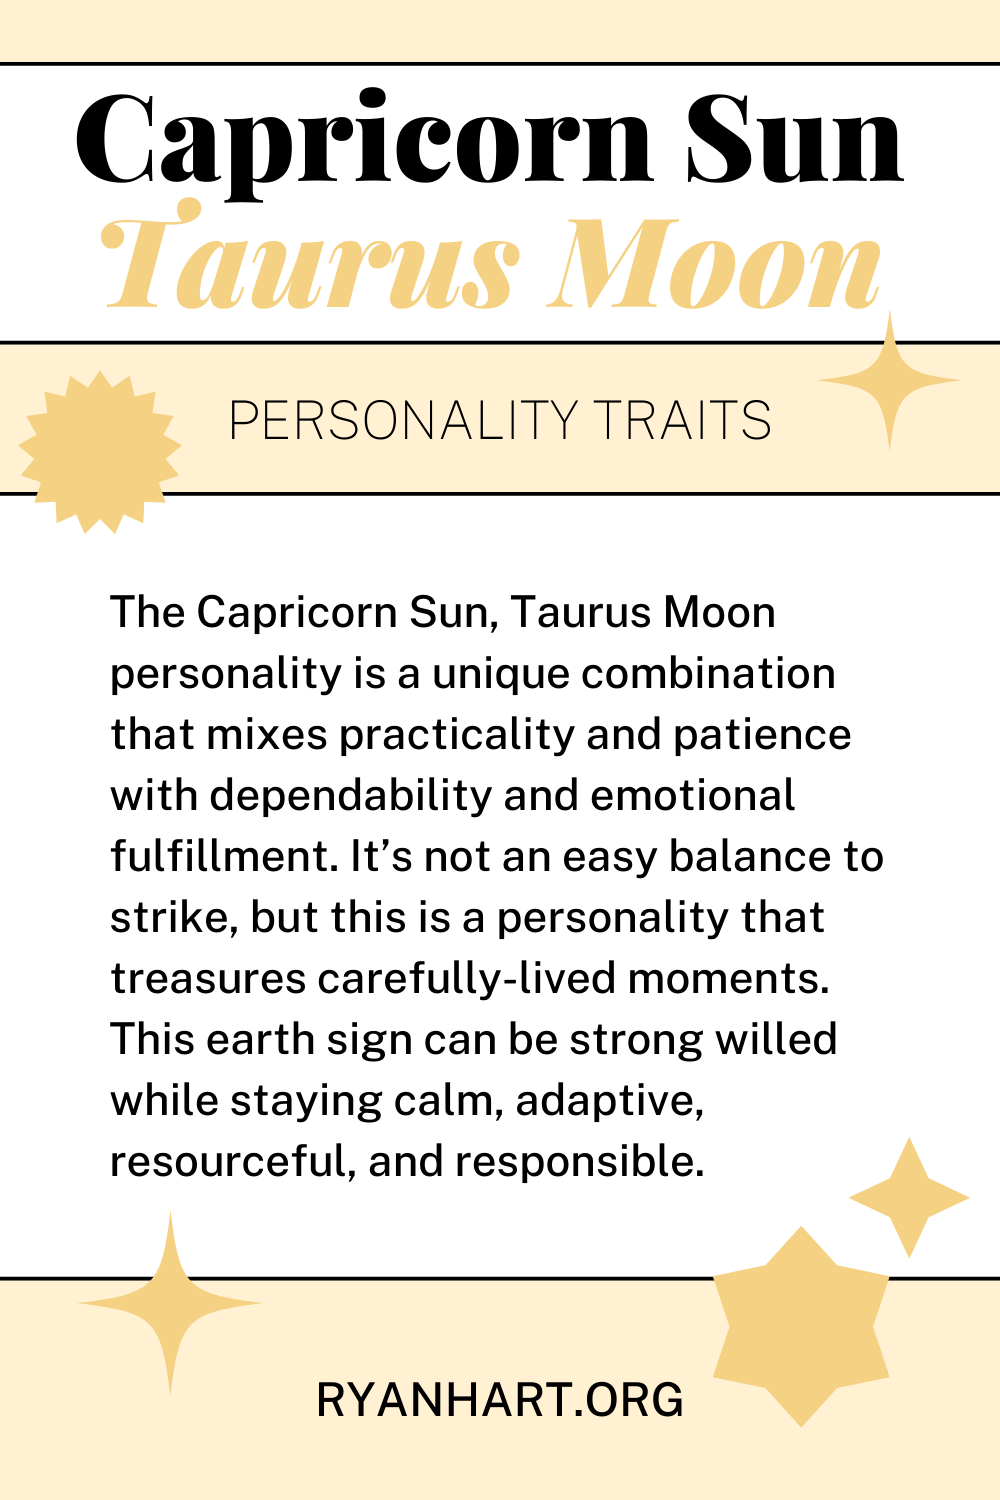 Capricorn Sun Taurus Moon Description